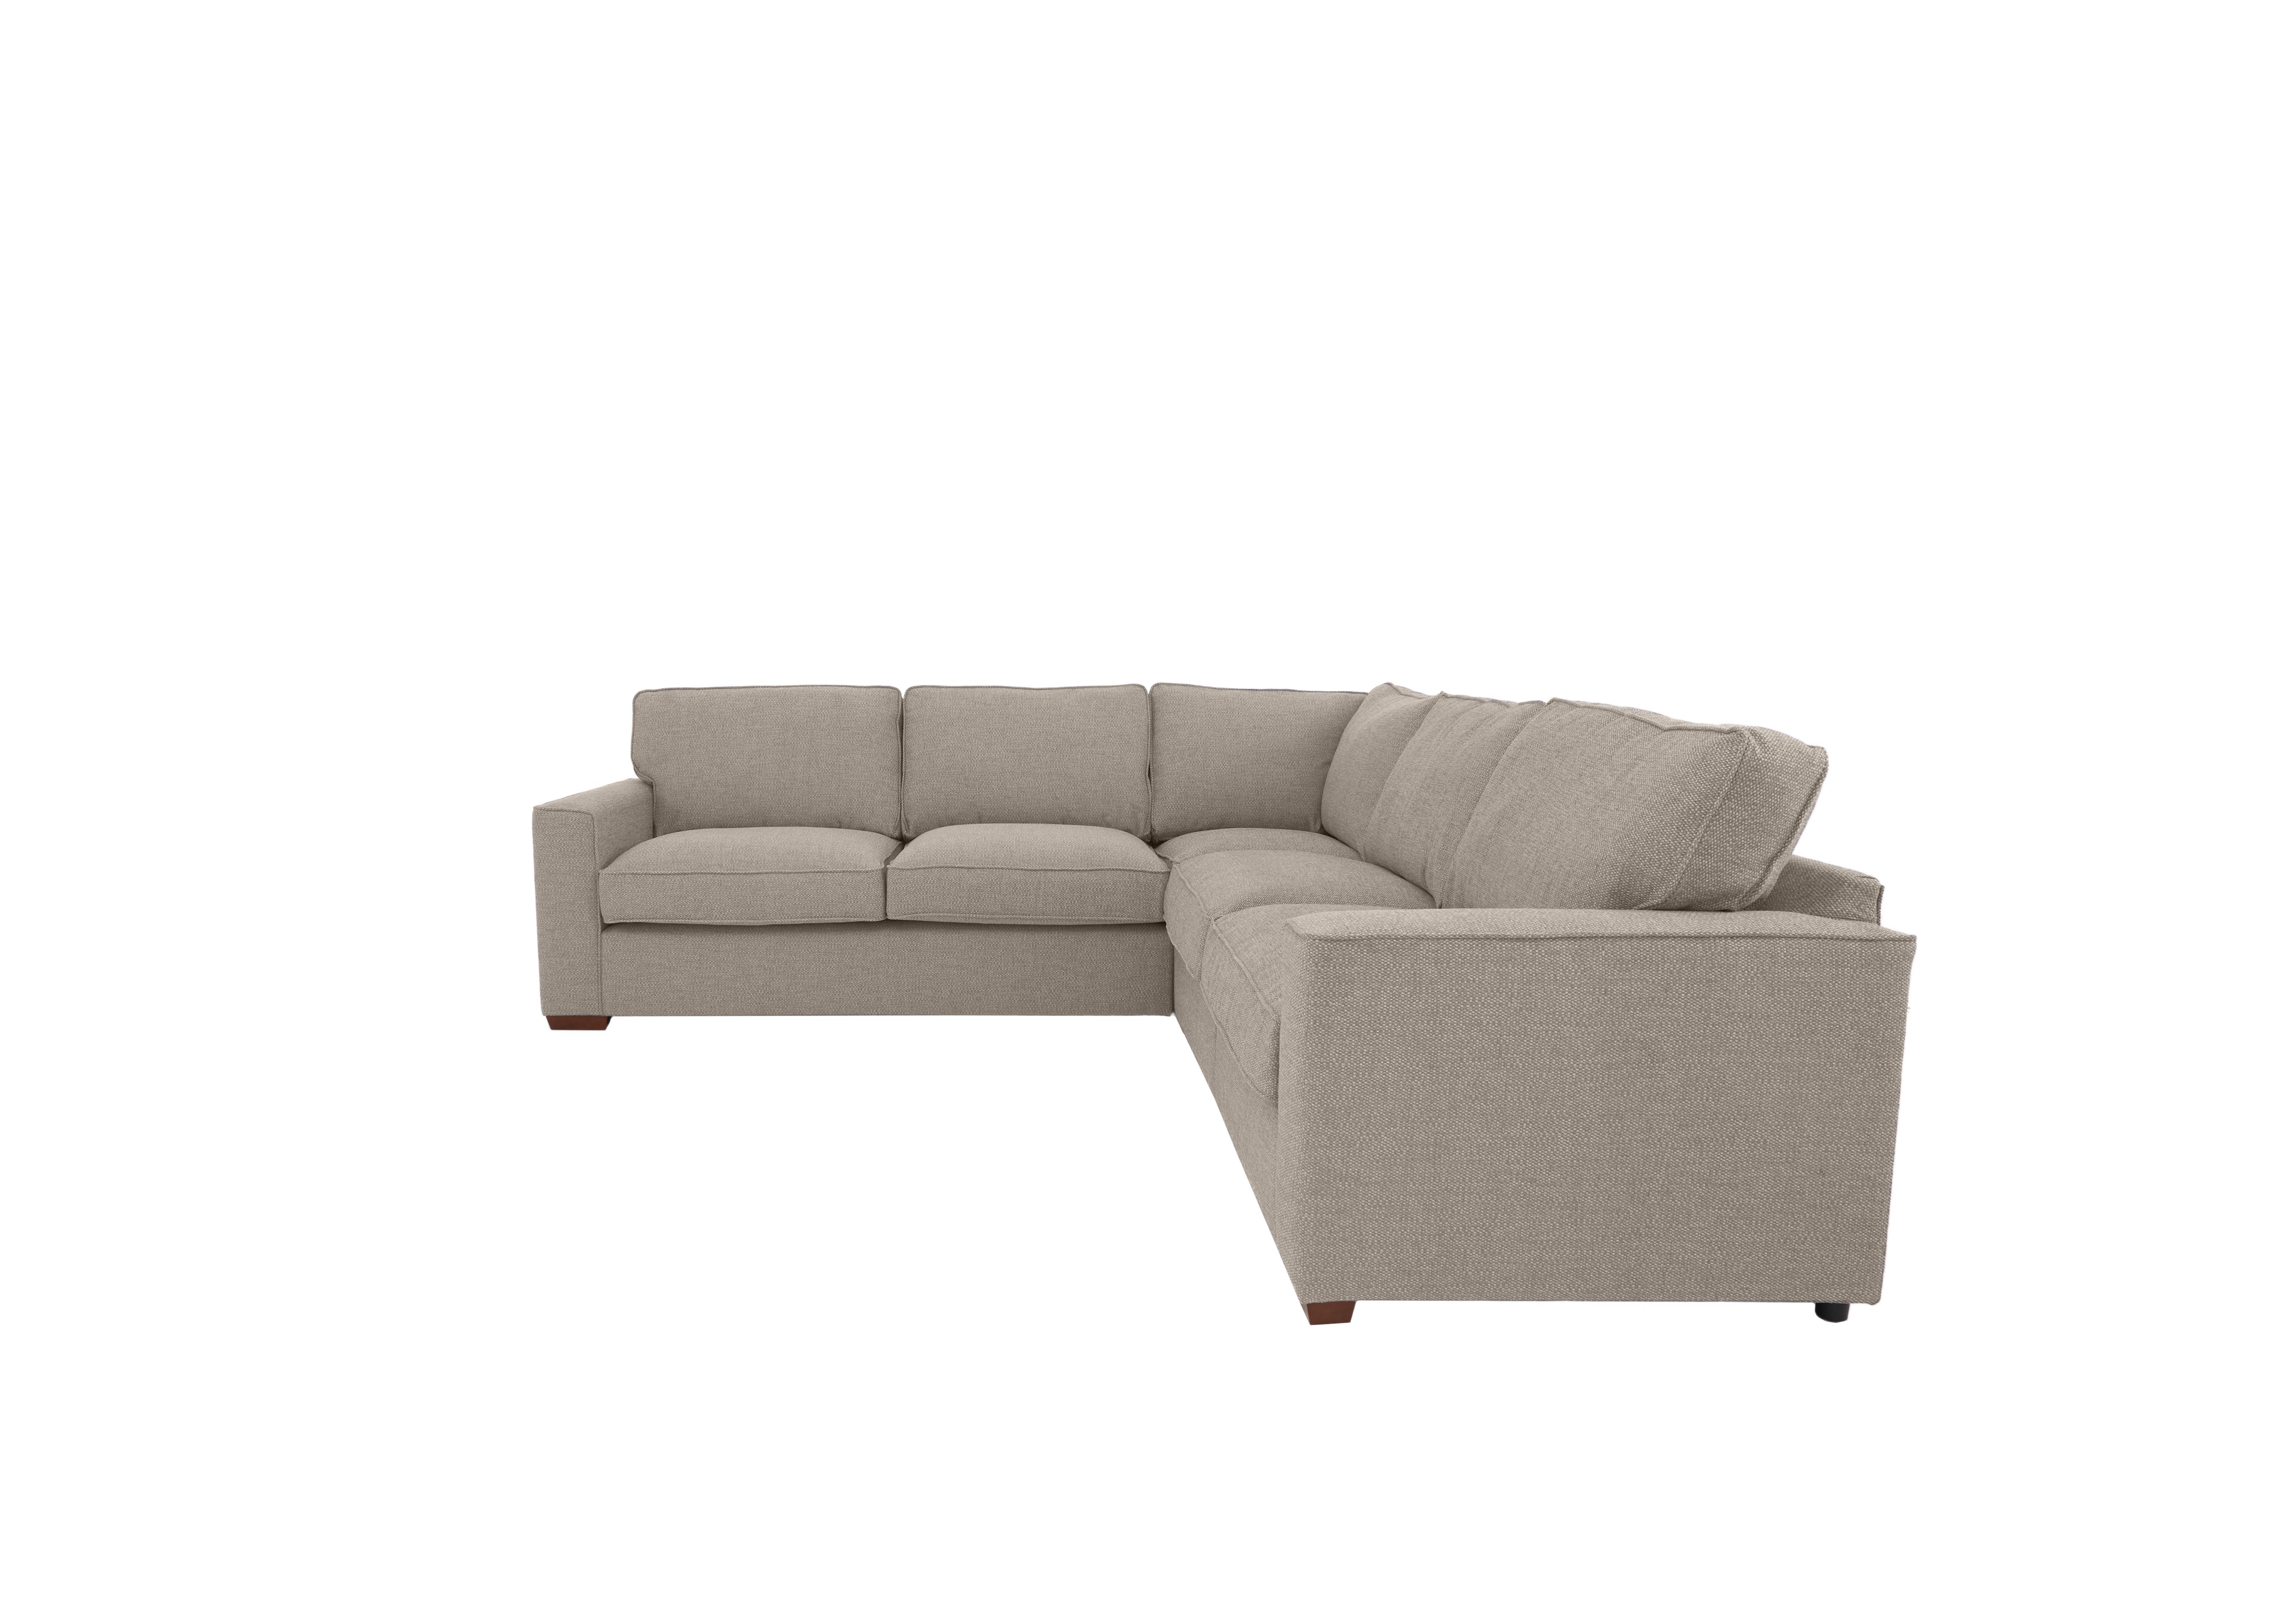 Cory Large Fabric Corner Classic Back Sofa in Dallas Natural on Furniture Village